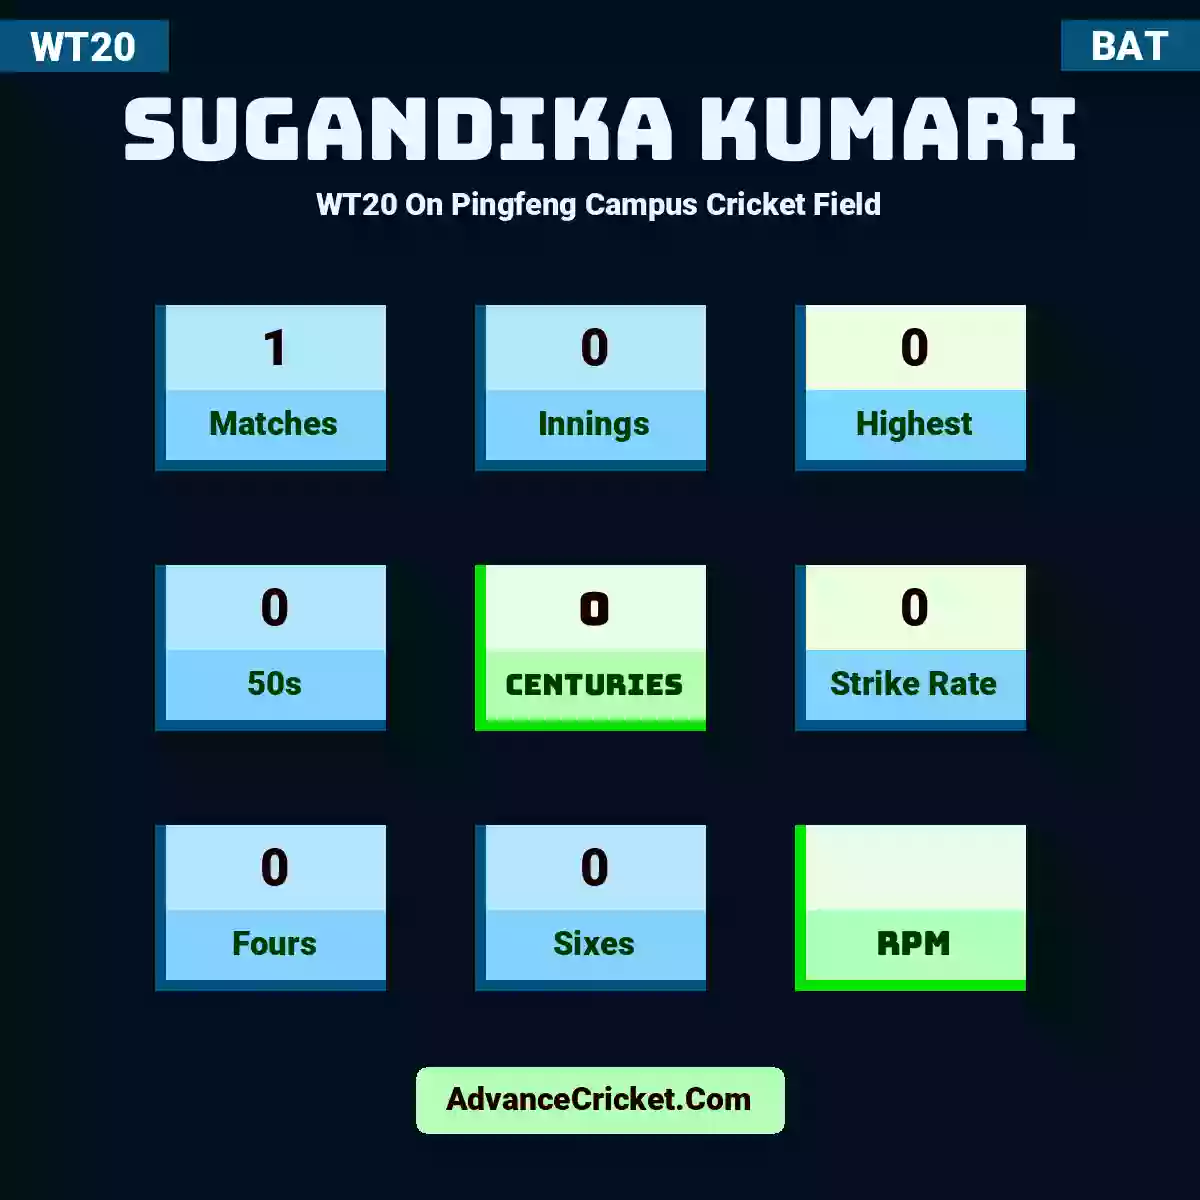 Sugandika Kumari WT20  On Pingfeng Campus Cricket Field, Sugandika Kumari played 1 matches, scored 0 runs as highest, 0 half-centuries, and 0 centuries, with a strike rate of 0. S.Kumari hit 0 fours and 0 sixes.